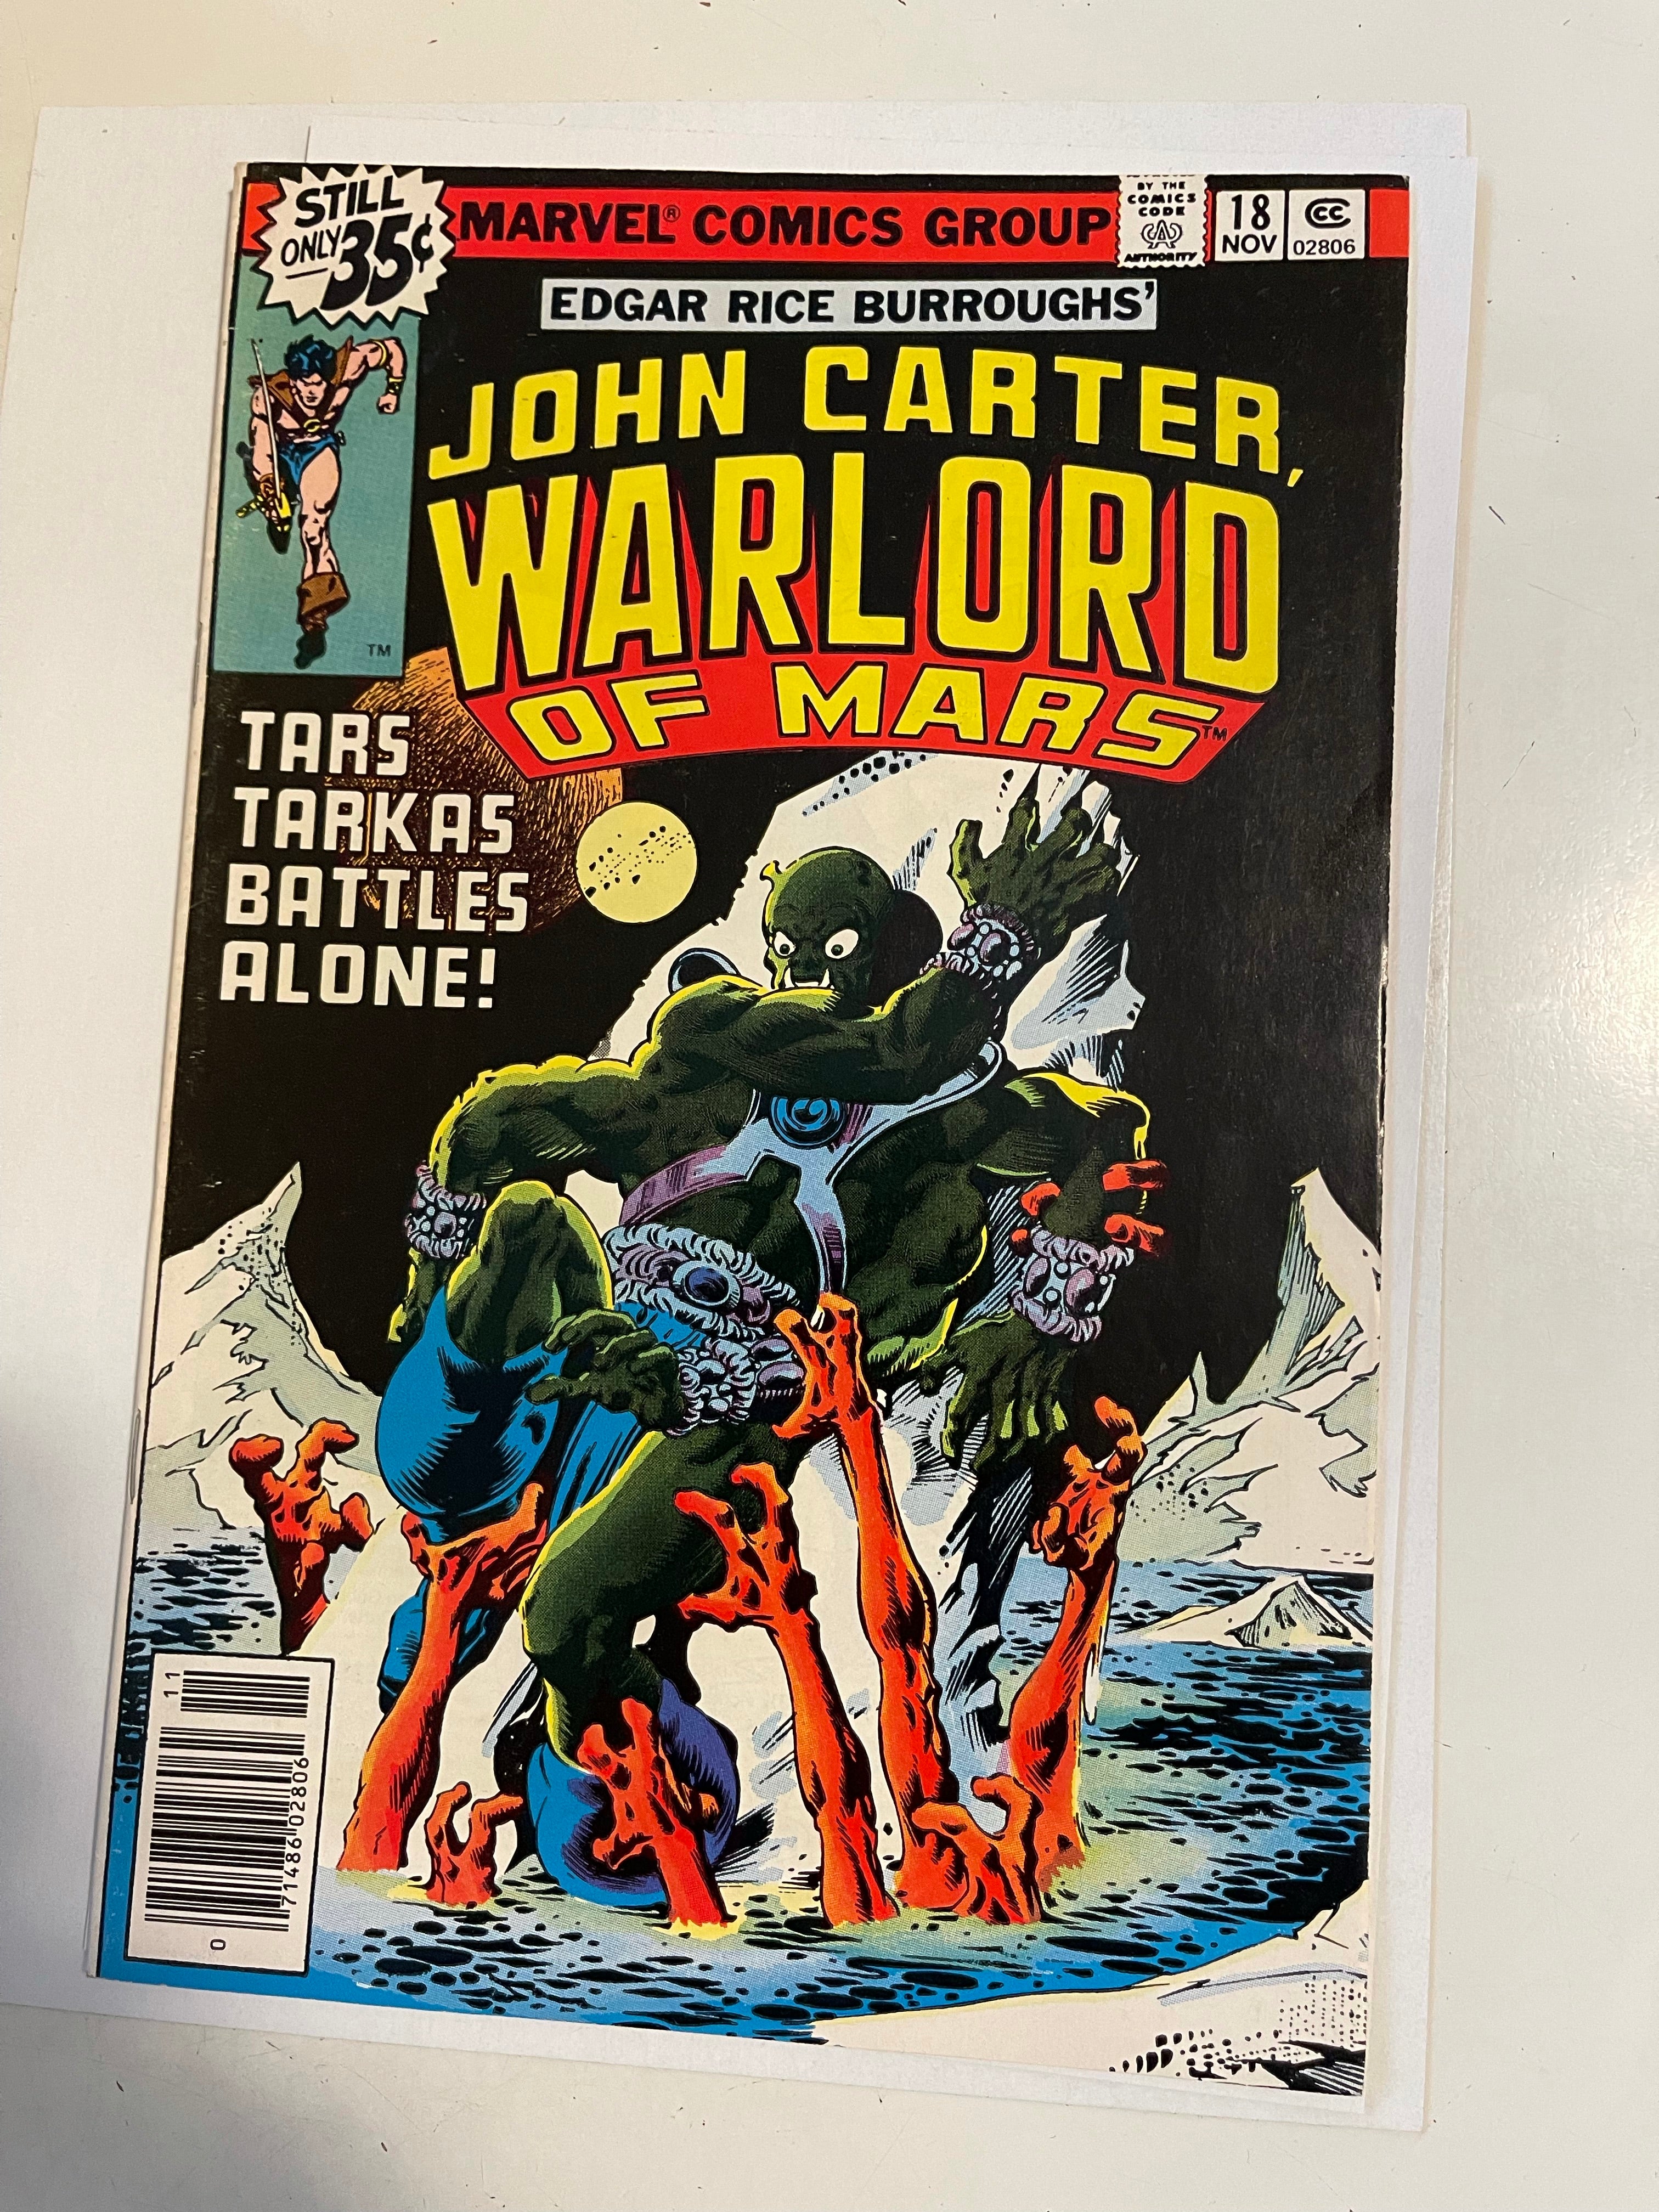 John Carter Warlord of Mars #18 comic with Frank Miller art 1978